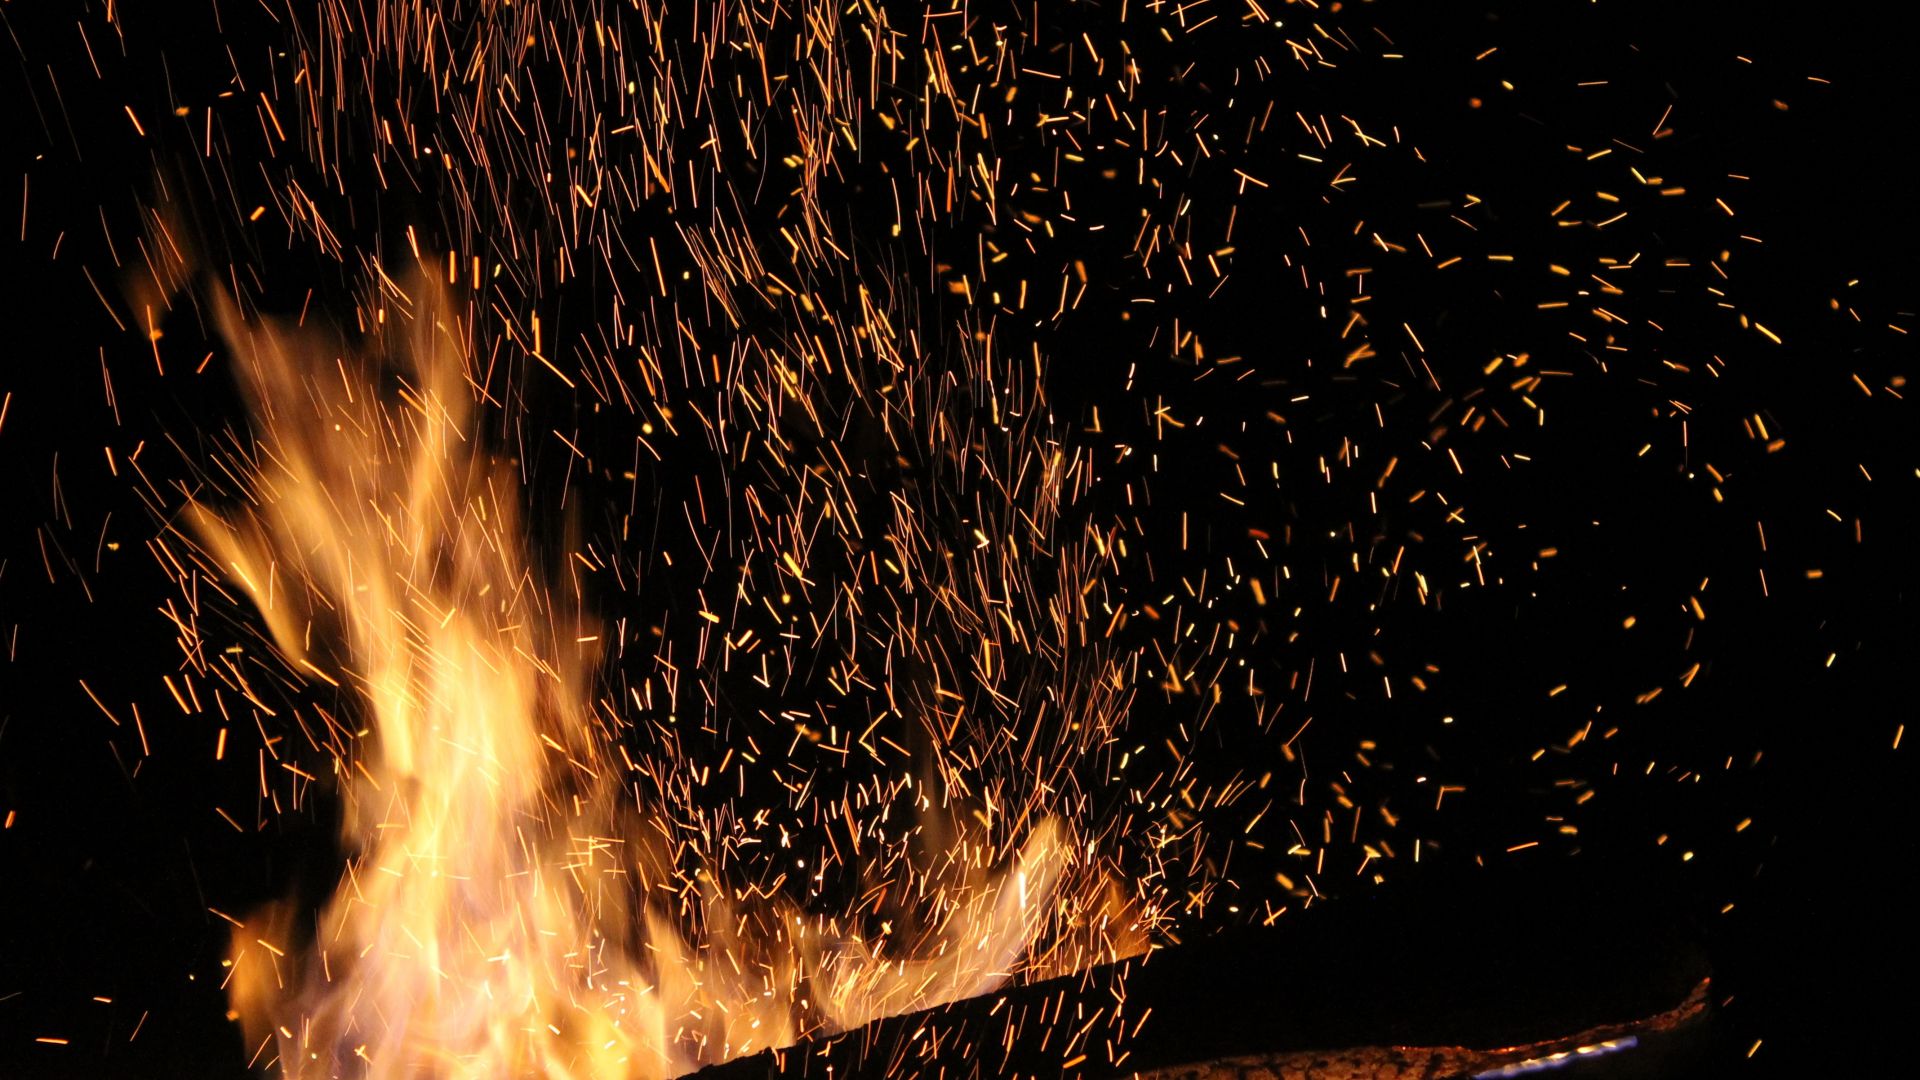 Desktop Wallpaper Fire, Campfire, Flames At Night, Hd Image, Picture,  Background, Q8ja7l